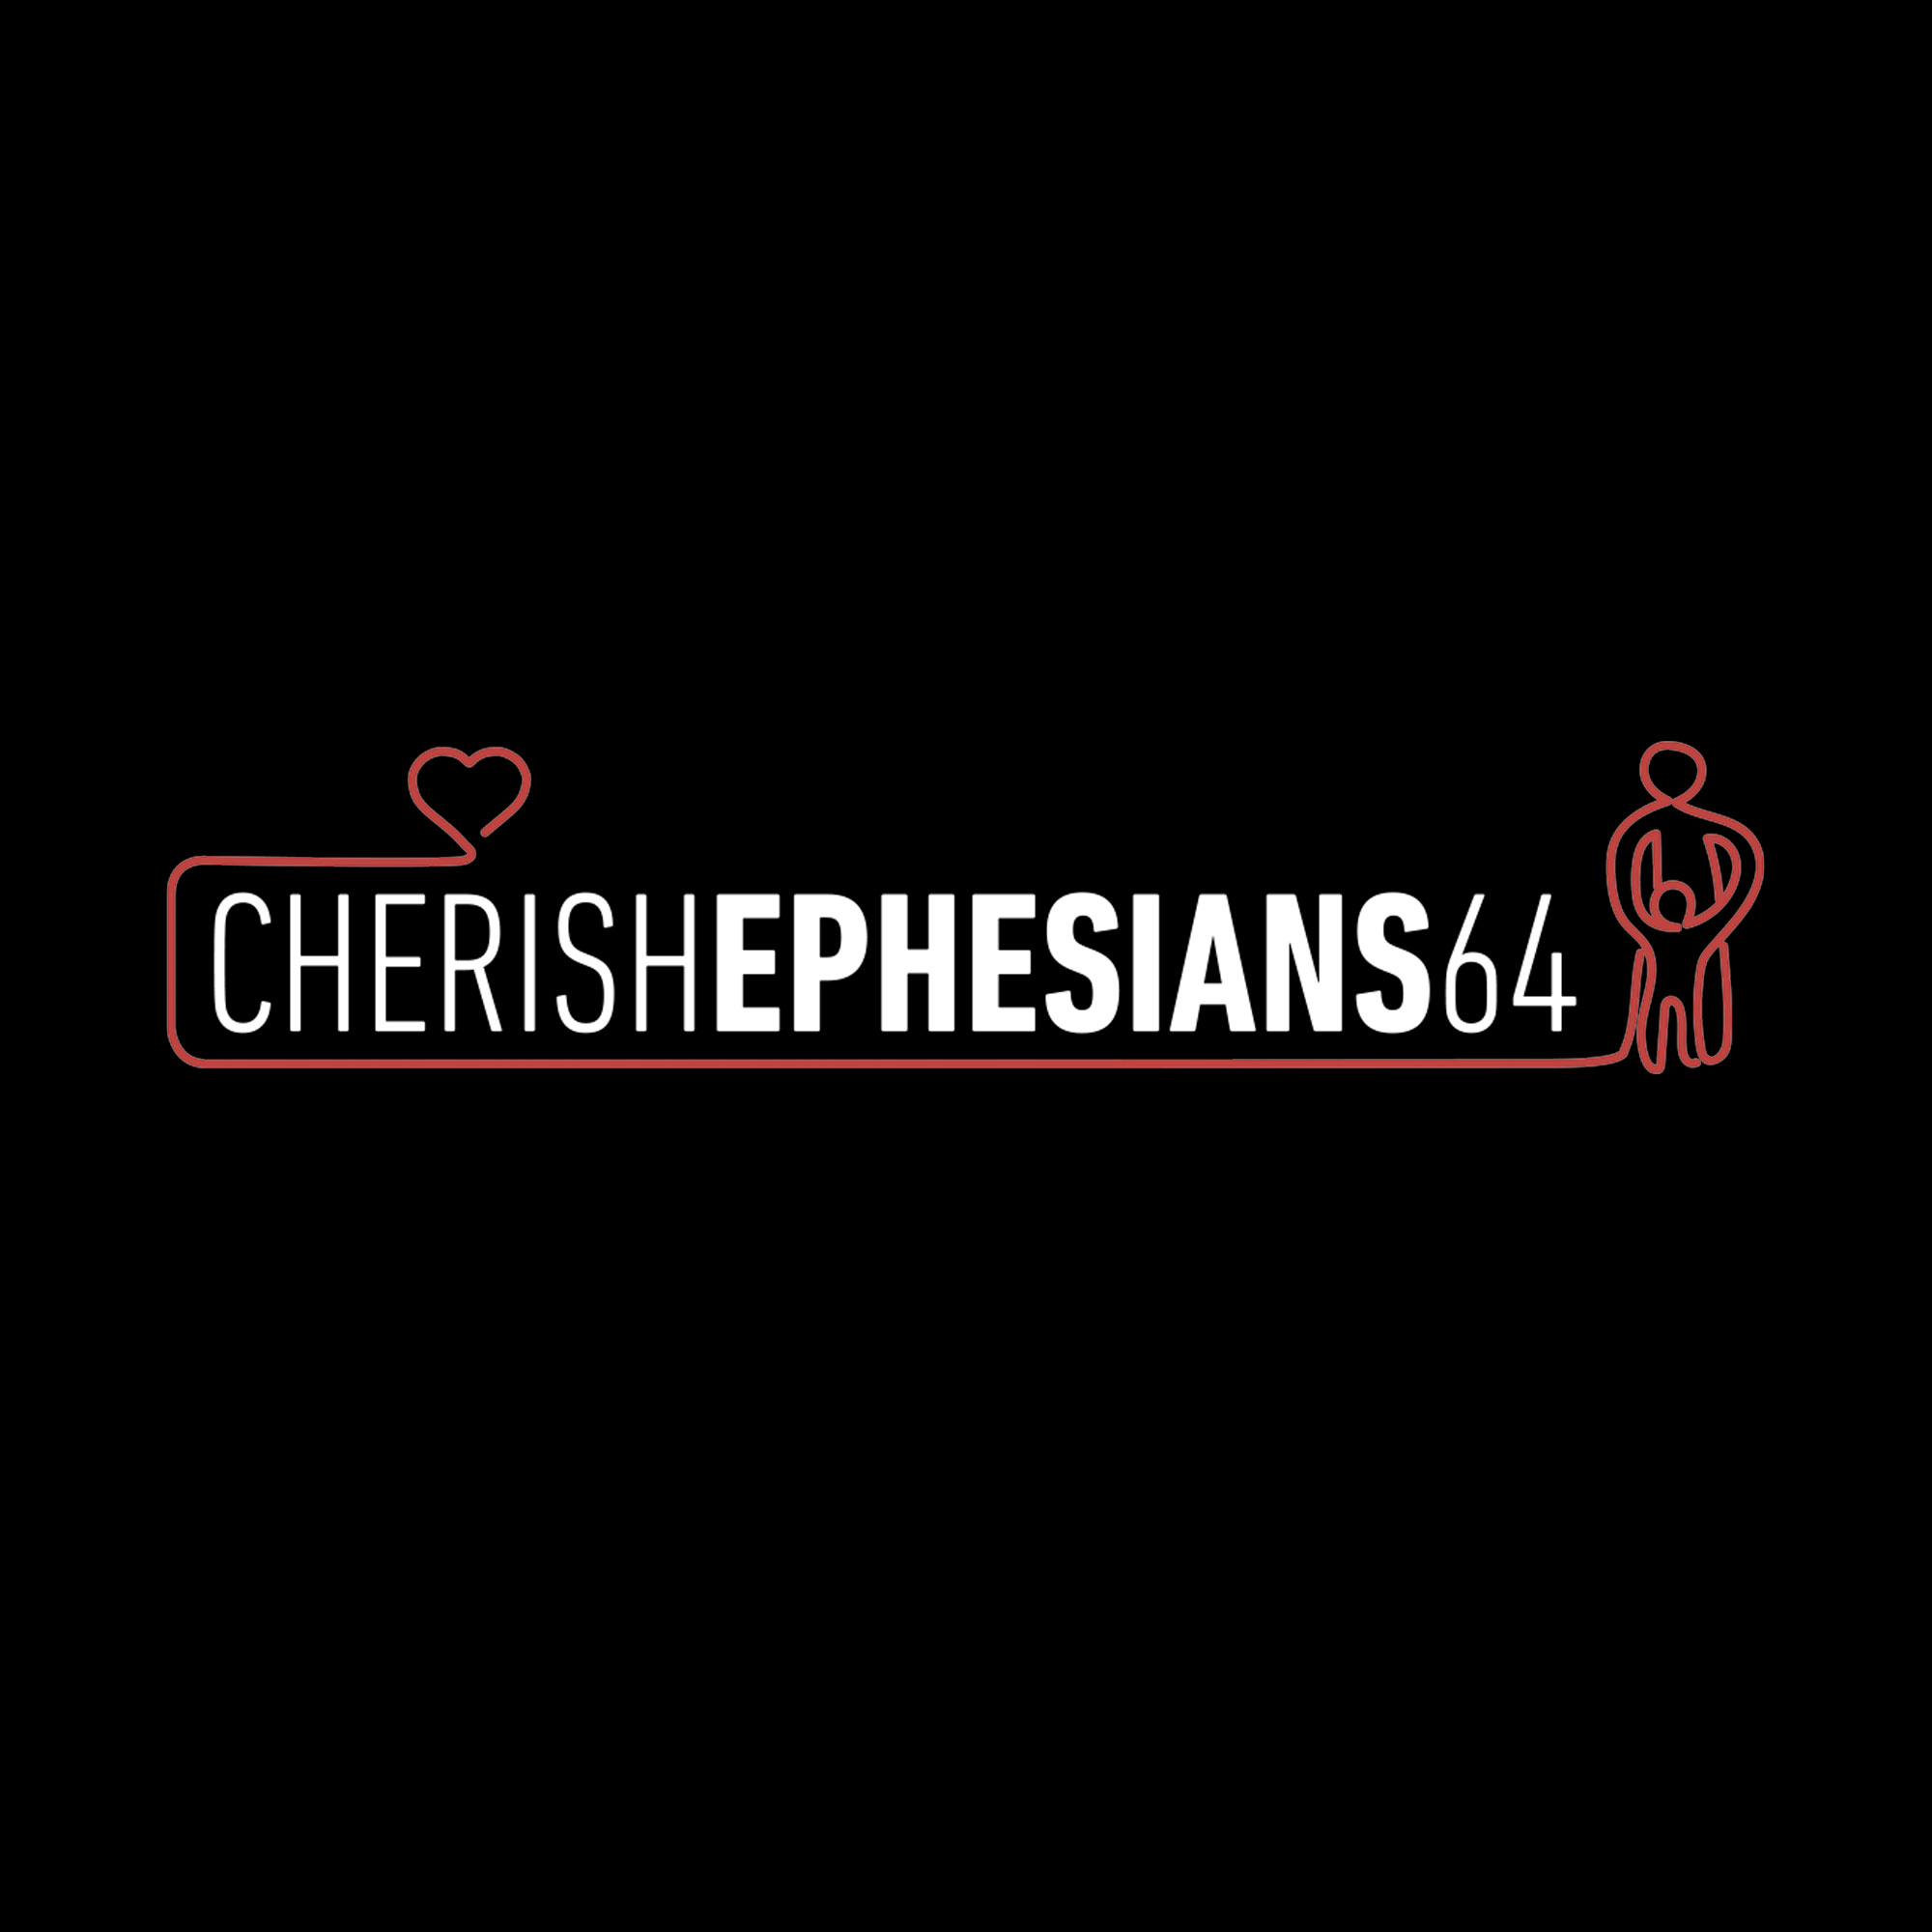 Cherish Ephesians 6:4